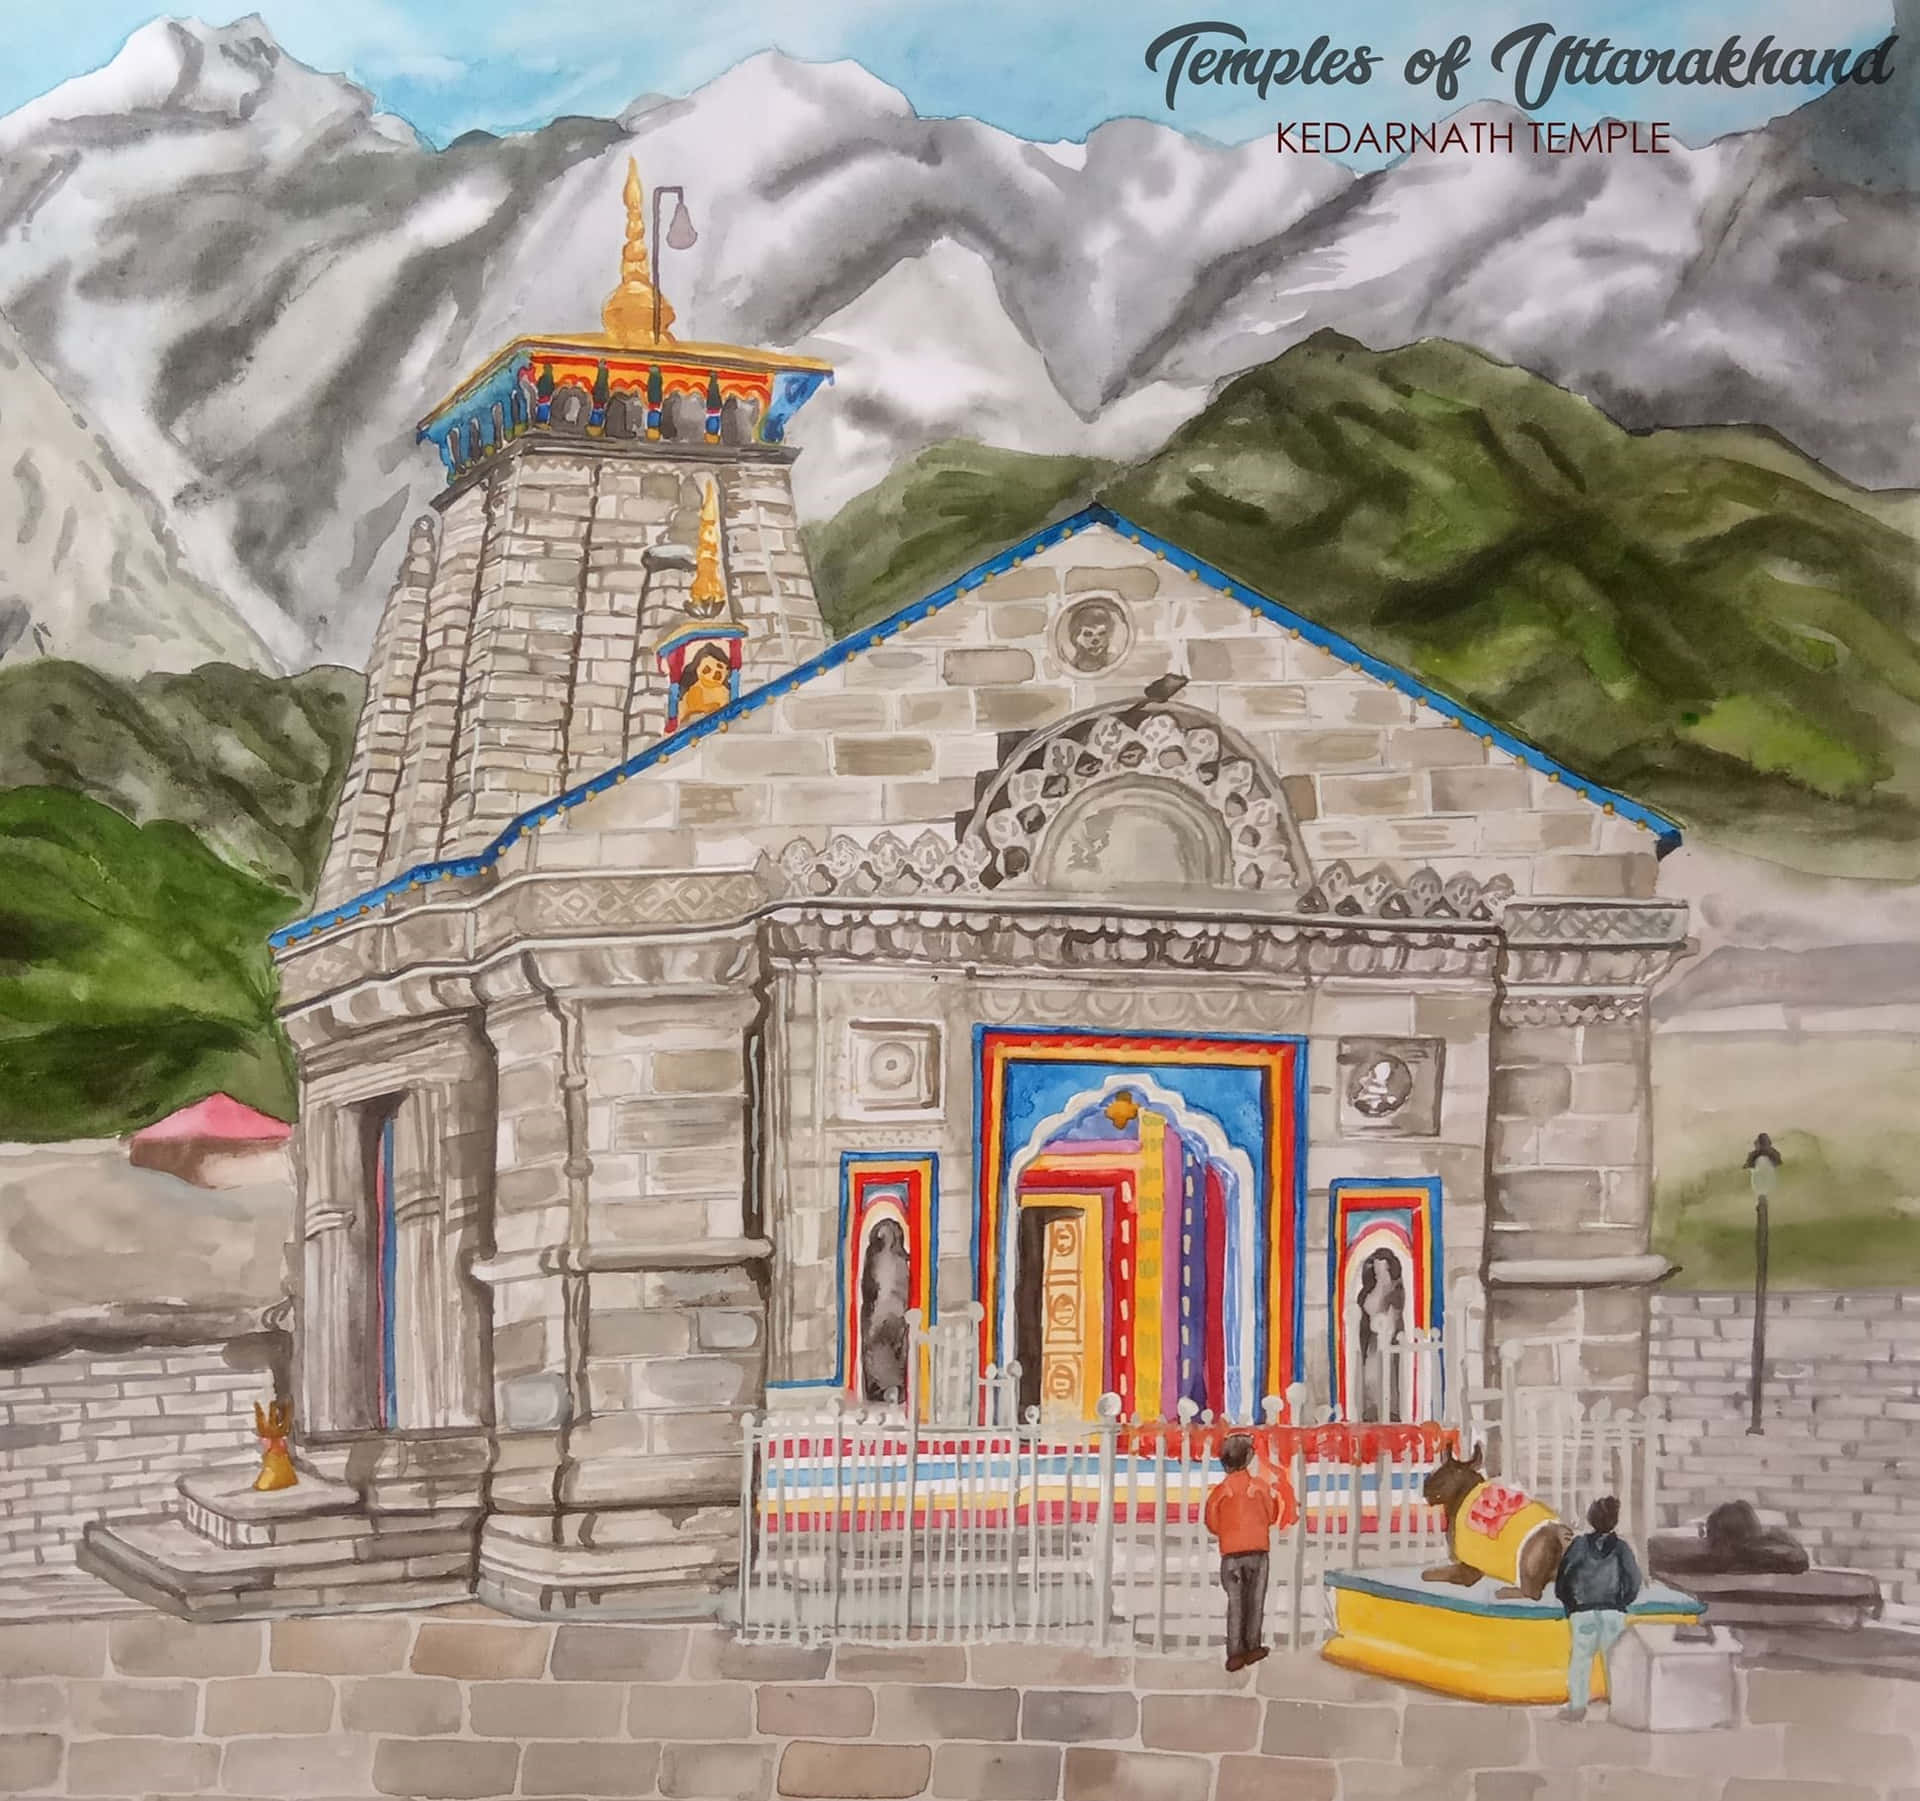 "The Magnificent Kedarnath Temple"